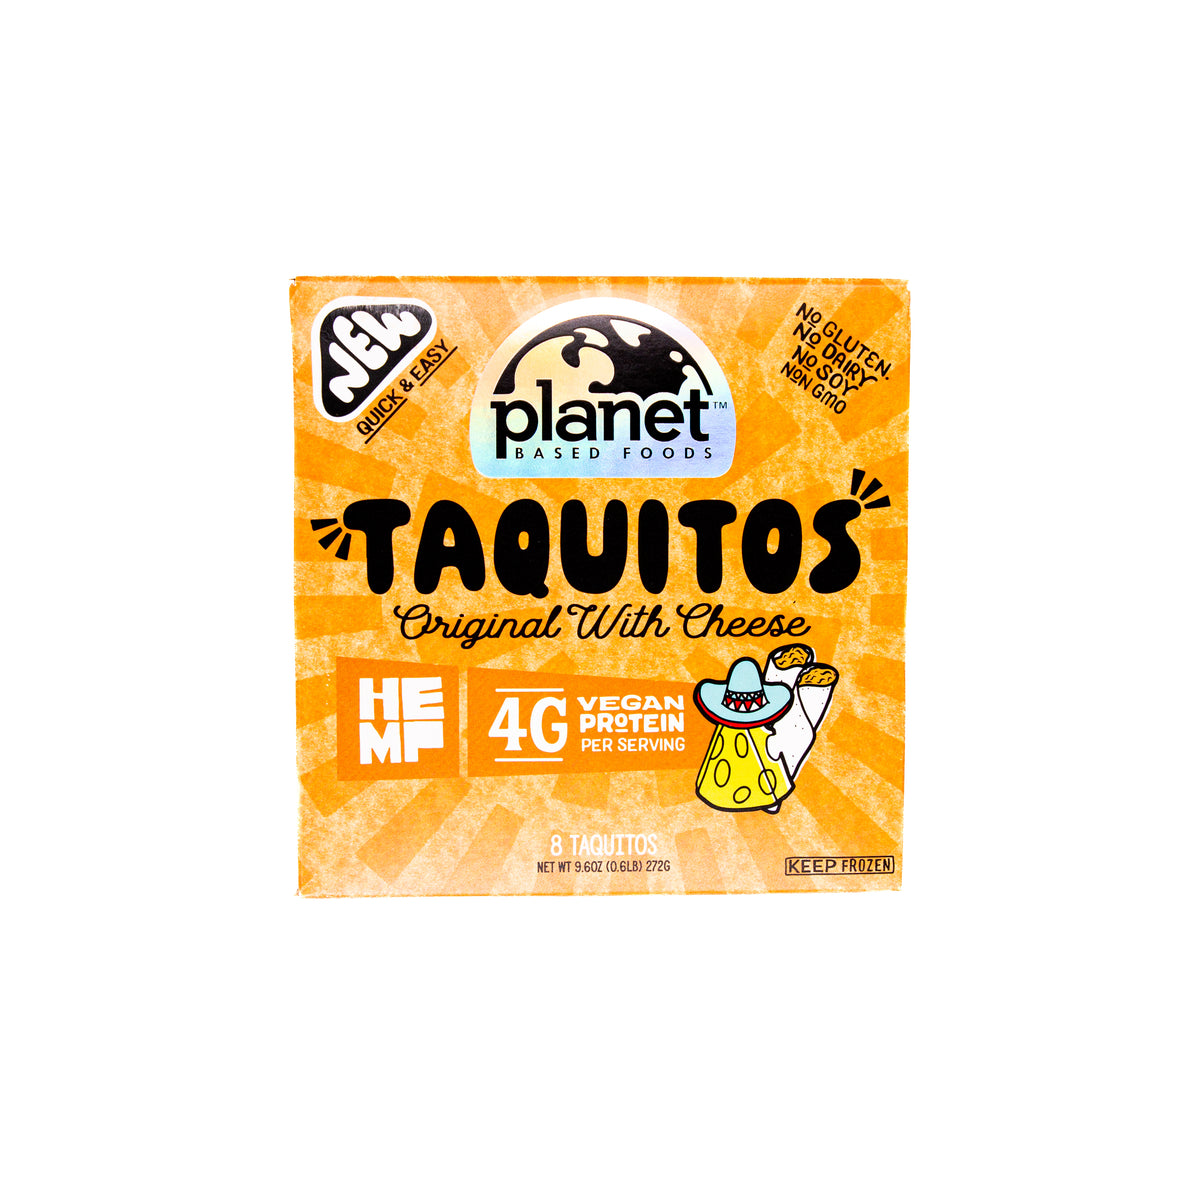 Planet Based Food Taquitos Original Cheese